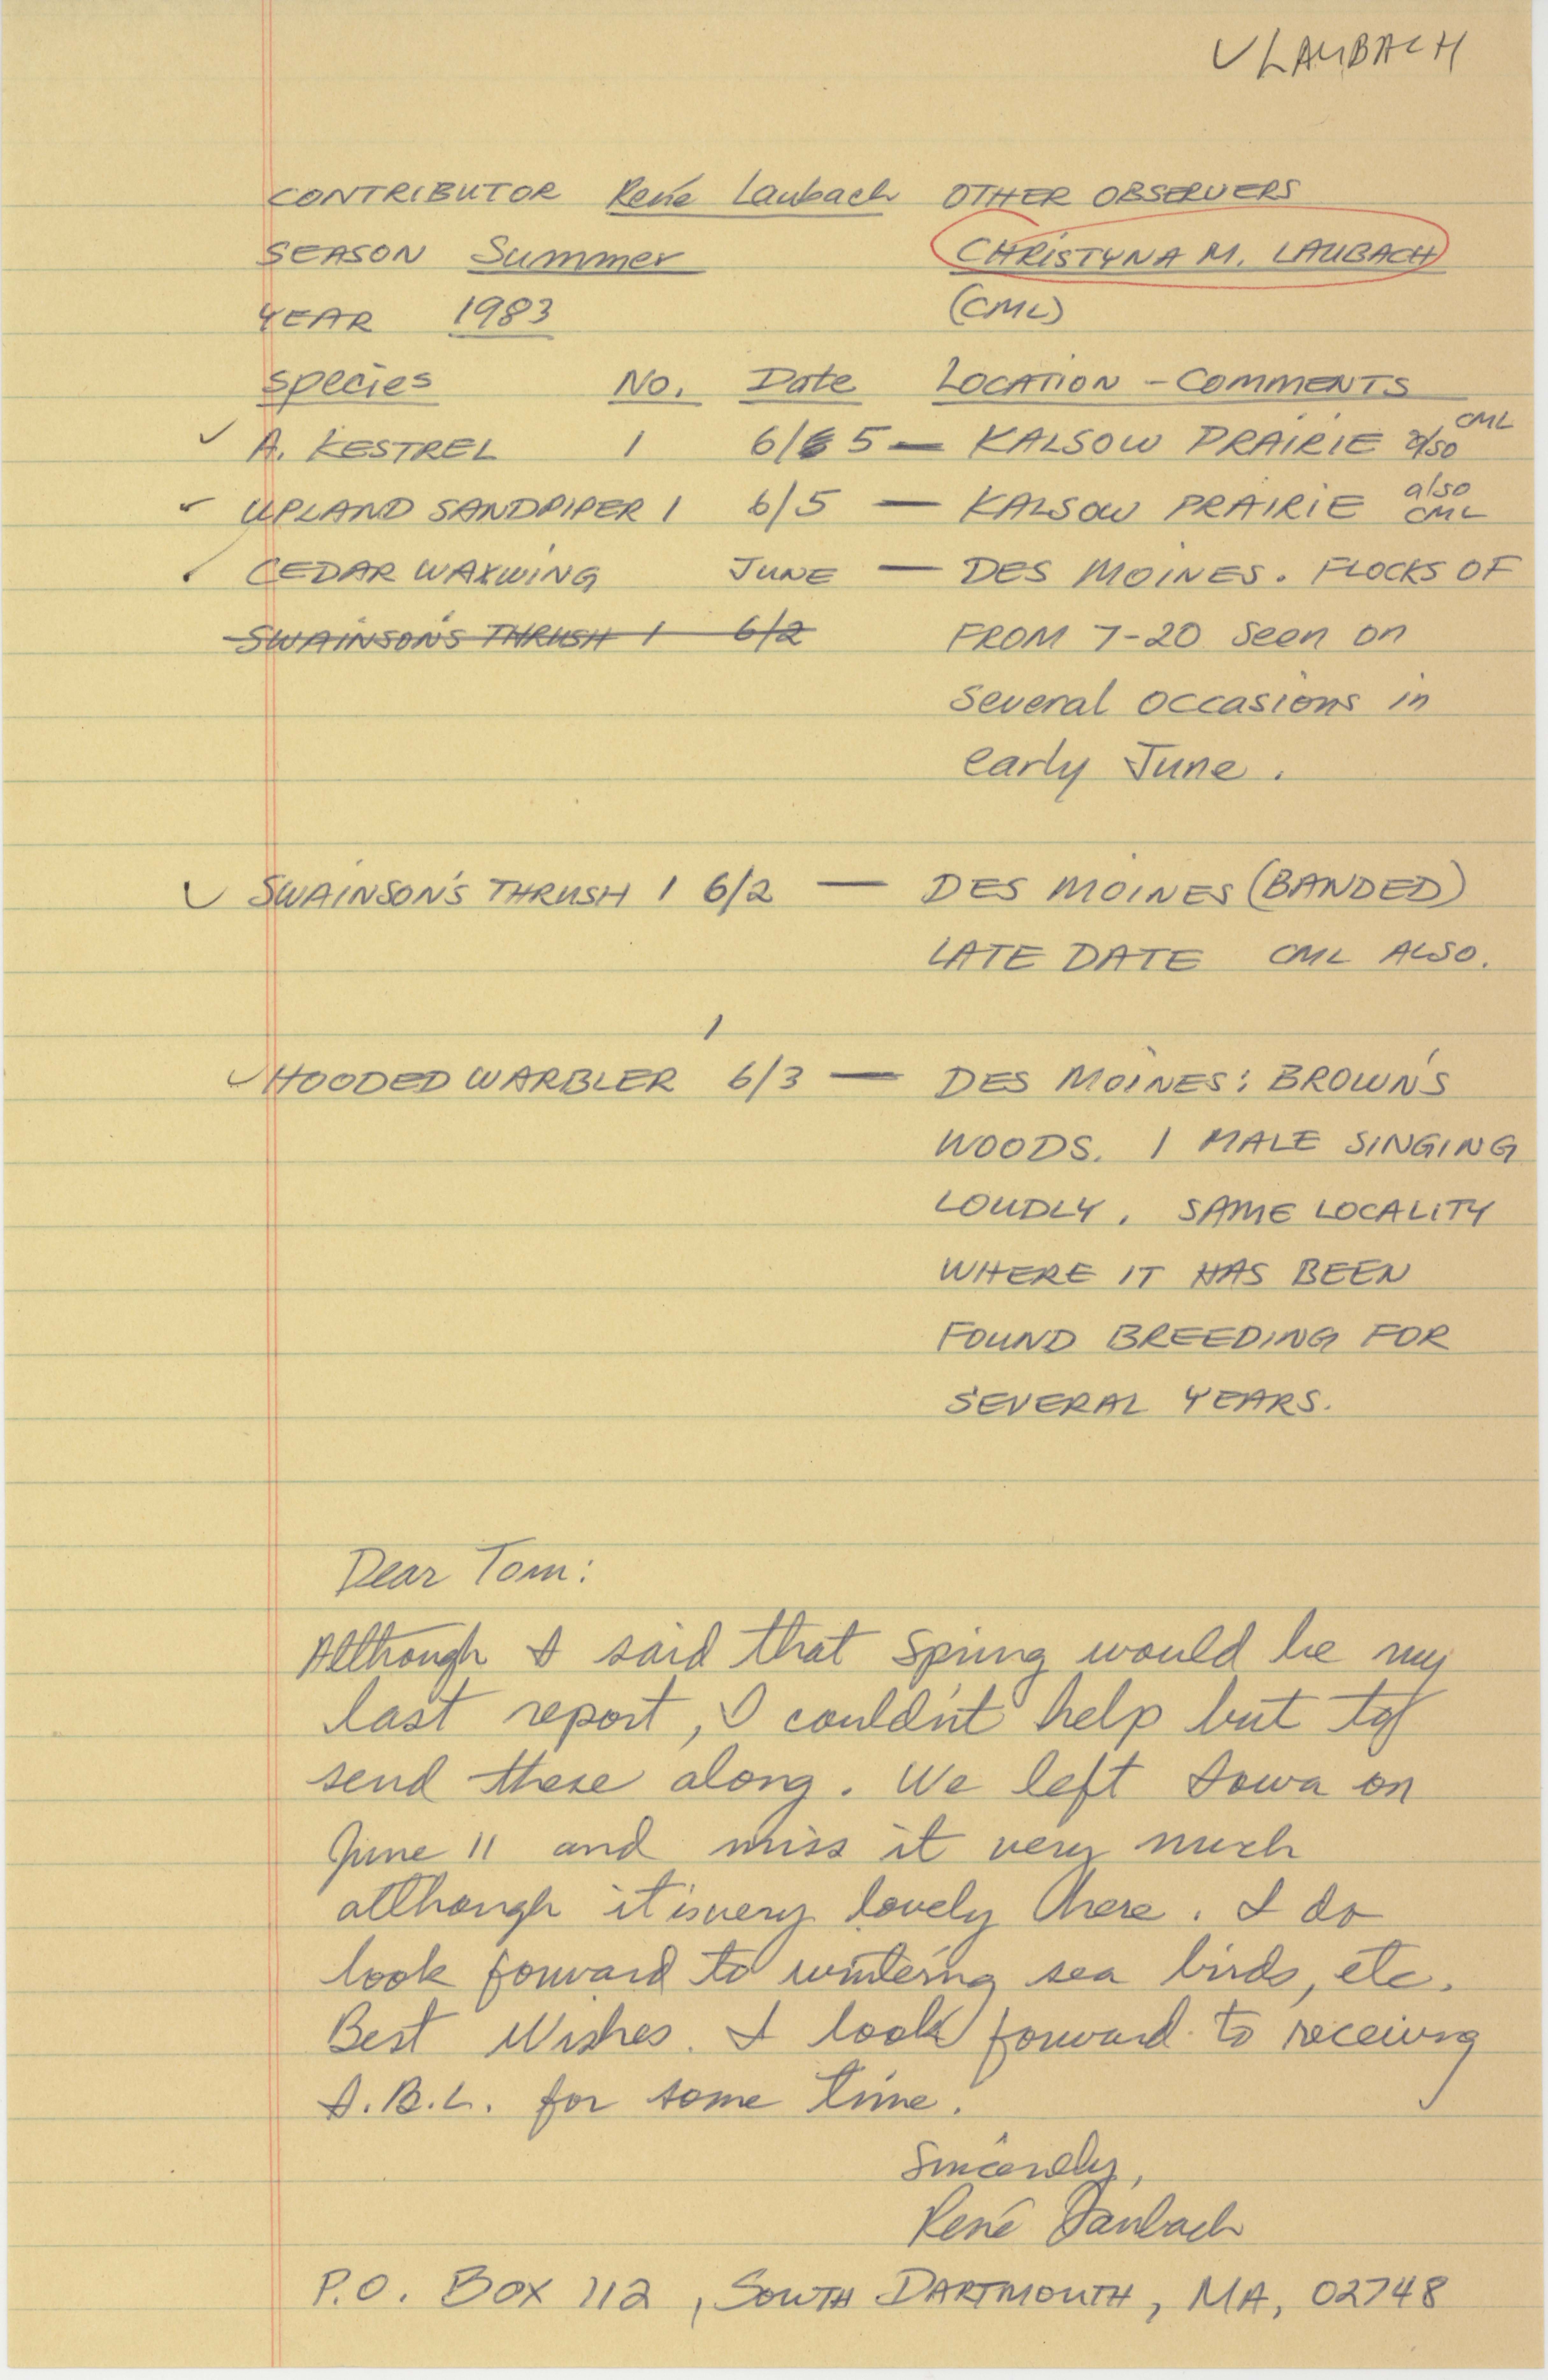 Rene Laubach letter to Thomas Kent regarding summer sightings, Summer 1983